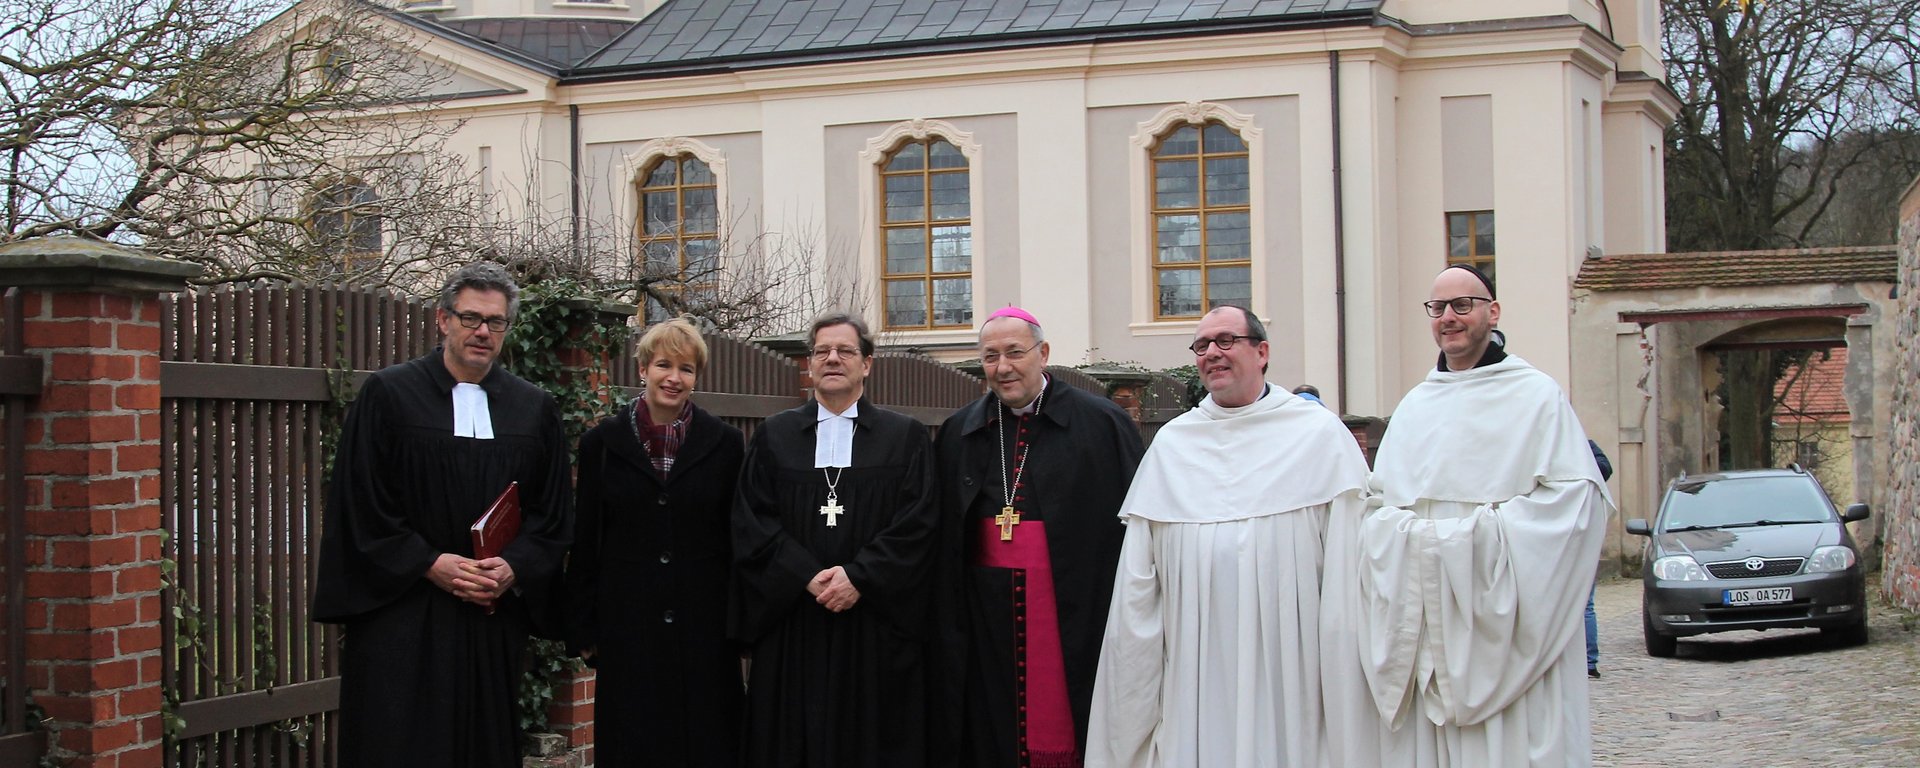 v.l.n.r.: Pfr. M. Groß, Ministerin Dr. M. Münch, Bischof Dr. M. Dröge, Bischof W. Ipolt, Prior Simeon, Pater Kilian